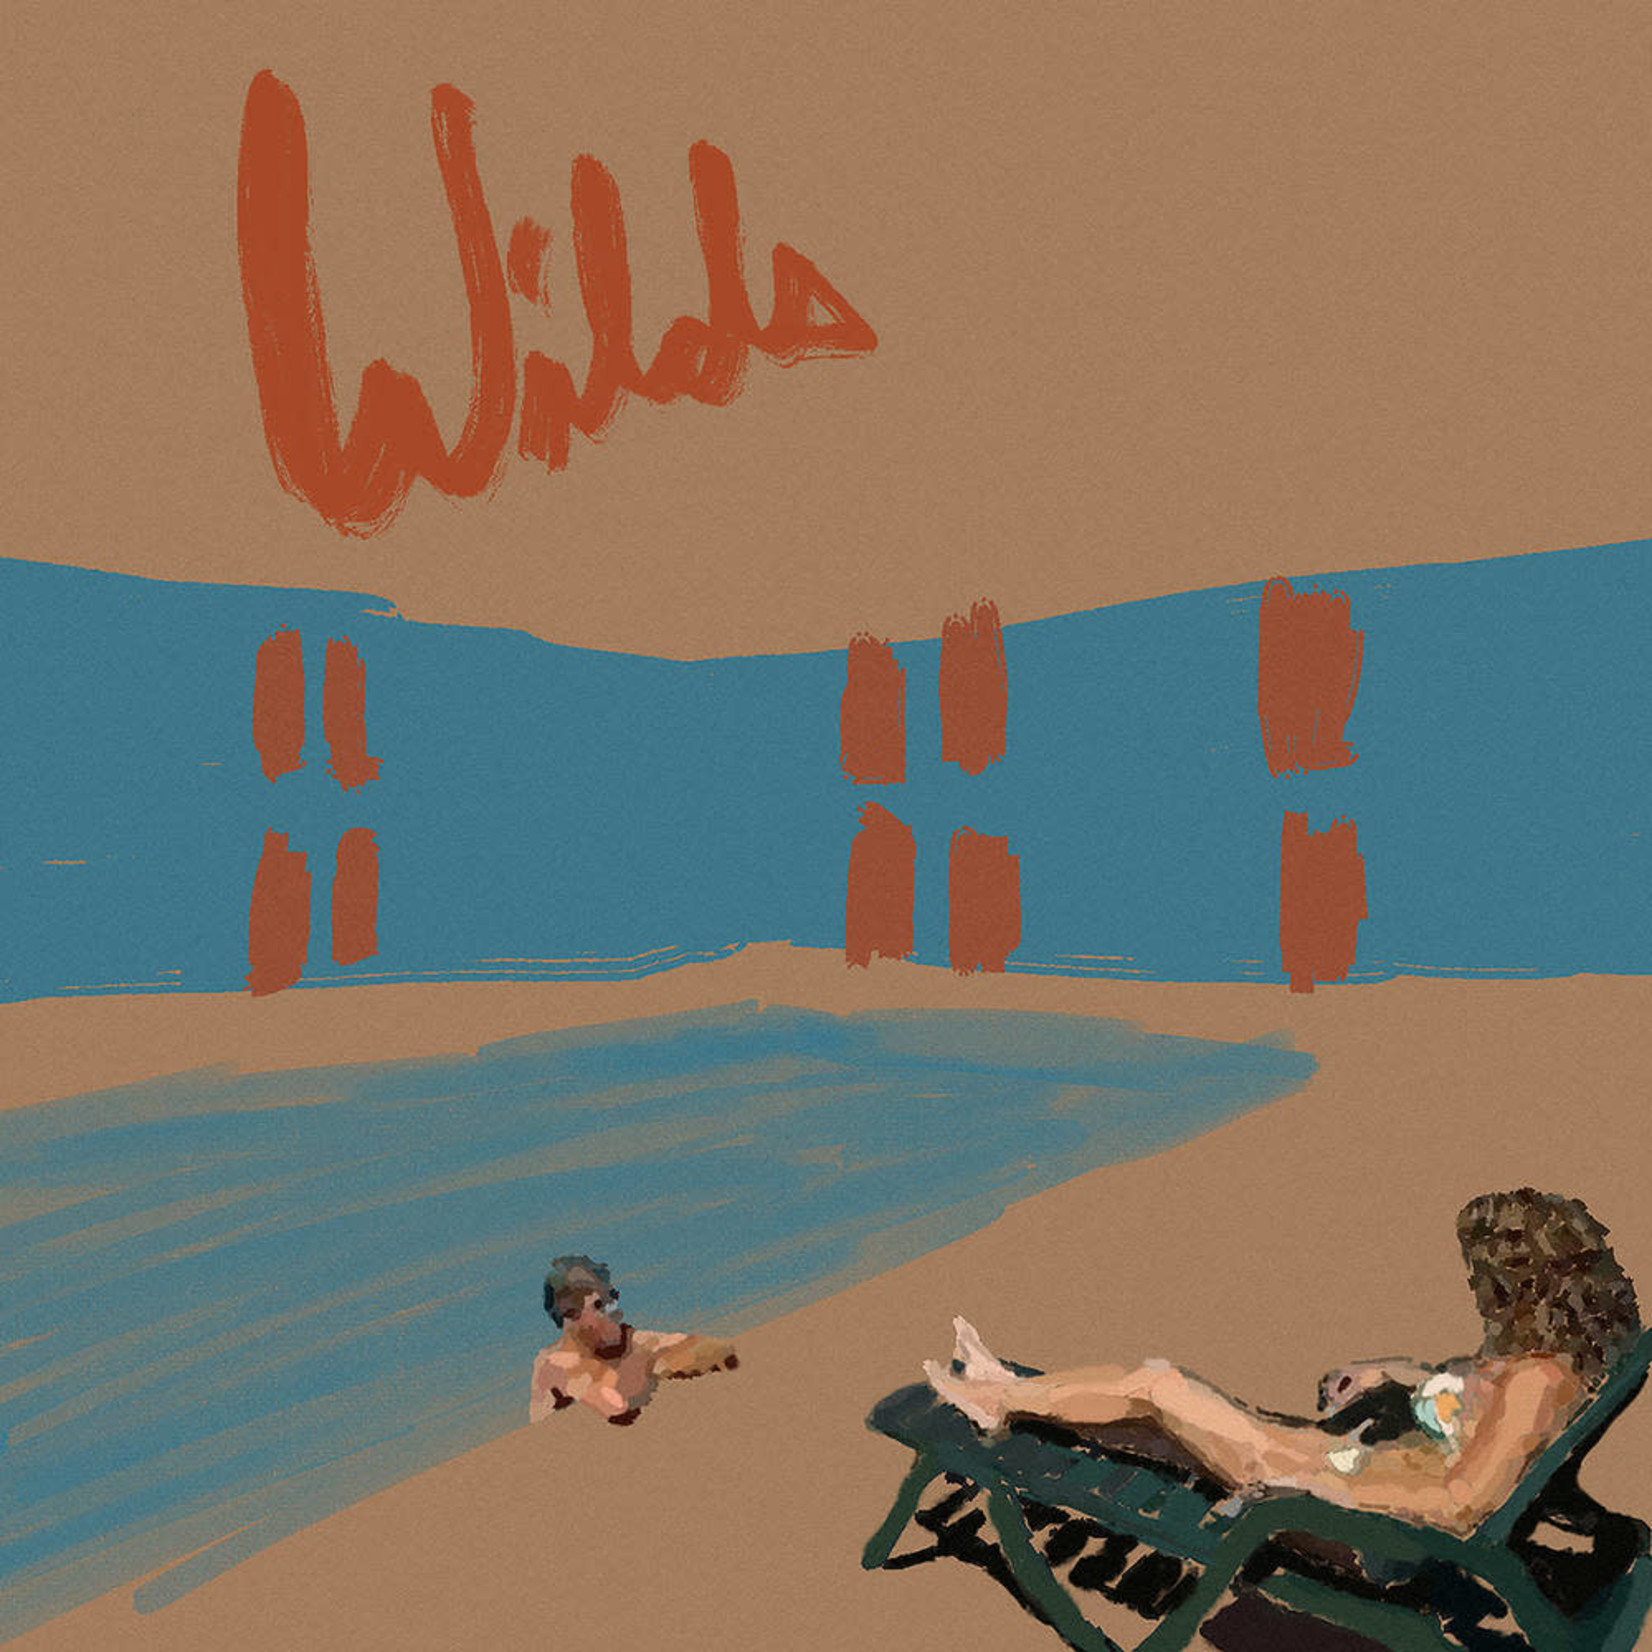 [New] Shauf, Andy: Wilds (Indie exclusive, translucent blue vinyl) [ARTS & CRAFTS]